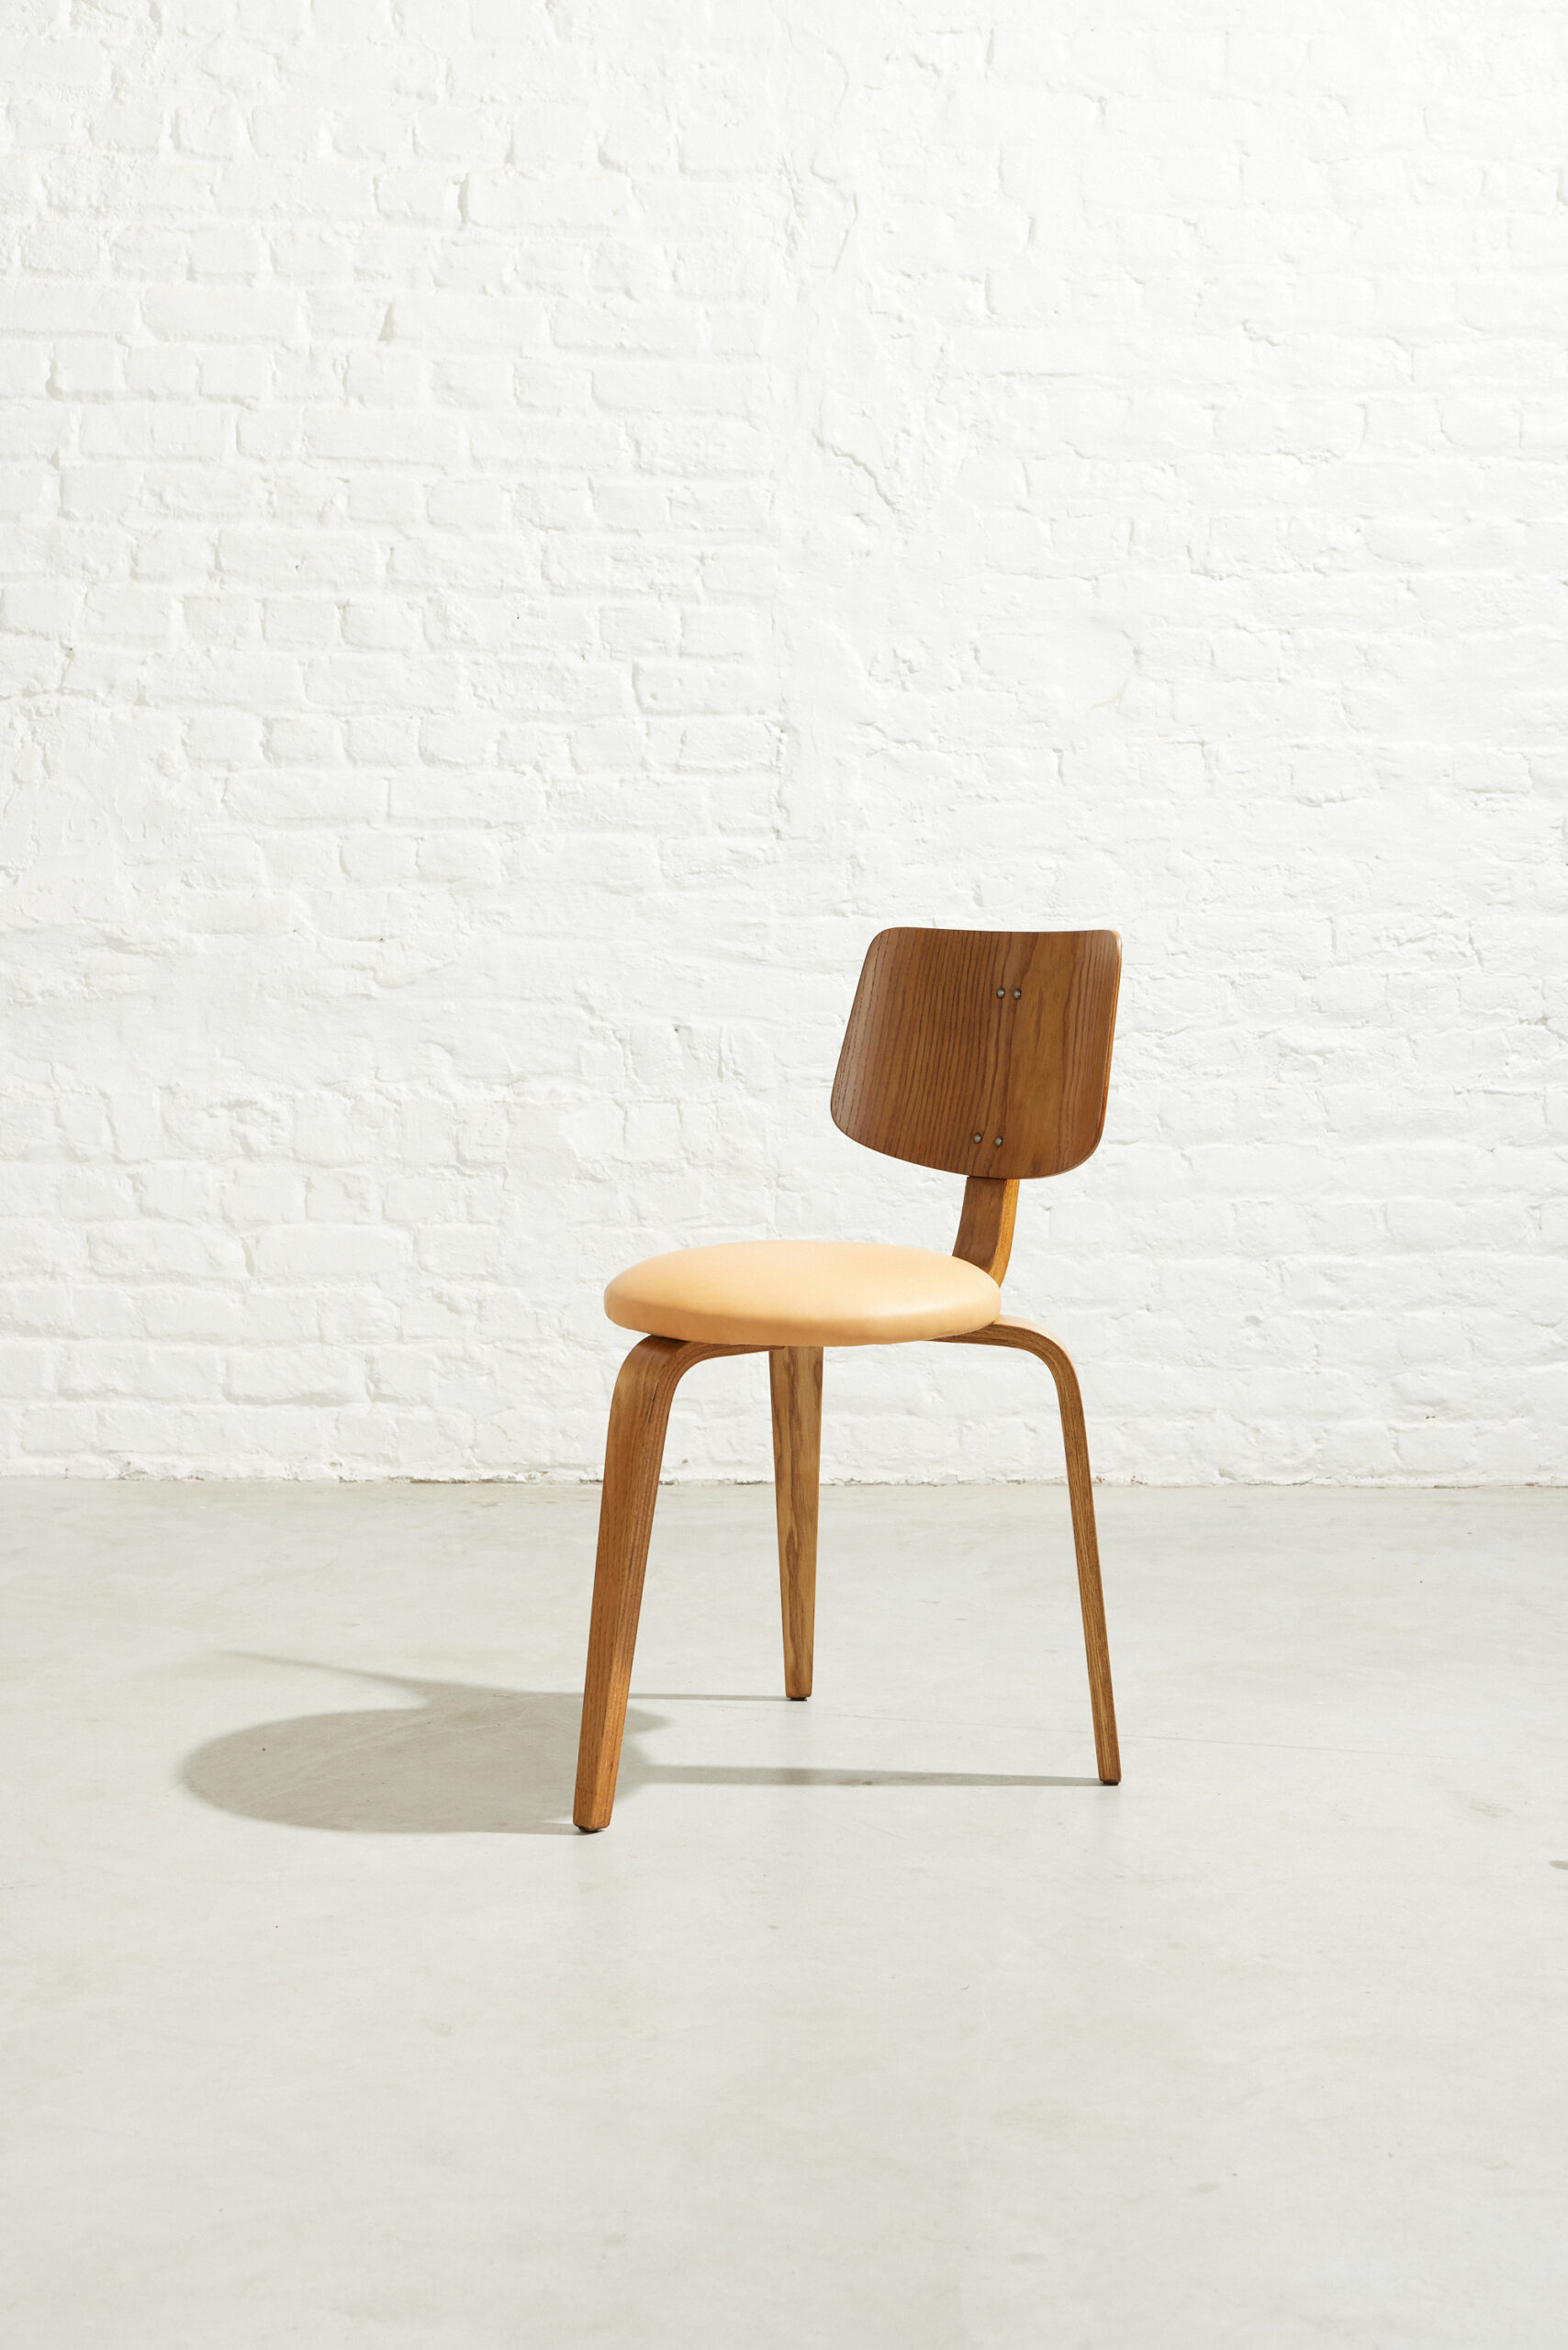 Rare plywood tripod chair by Menovich Wouda